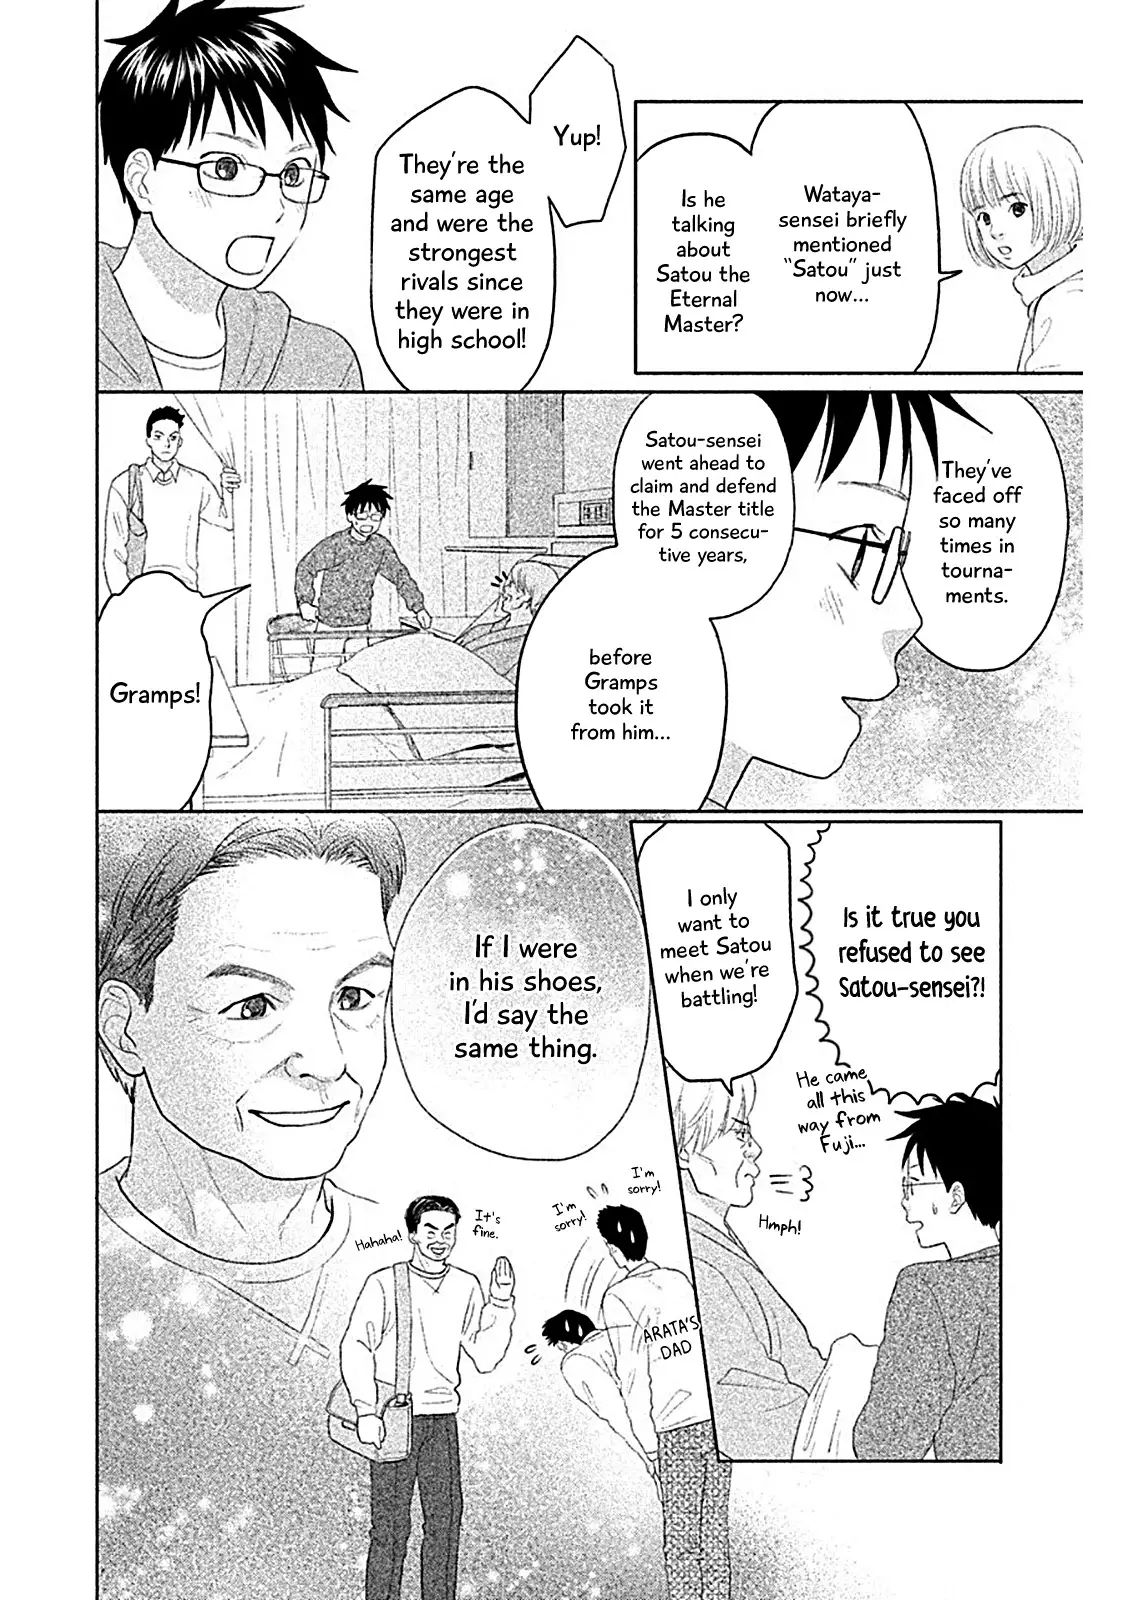 Chihayafuru: Middle School Arc - 6 page 13